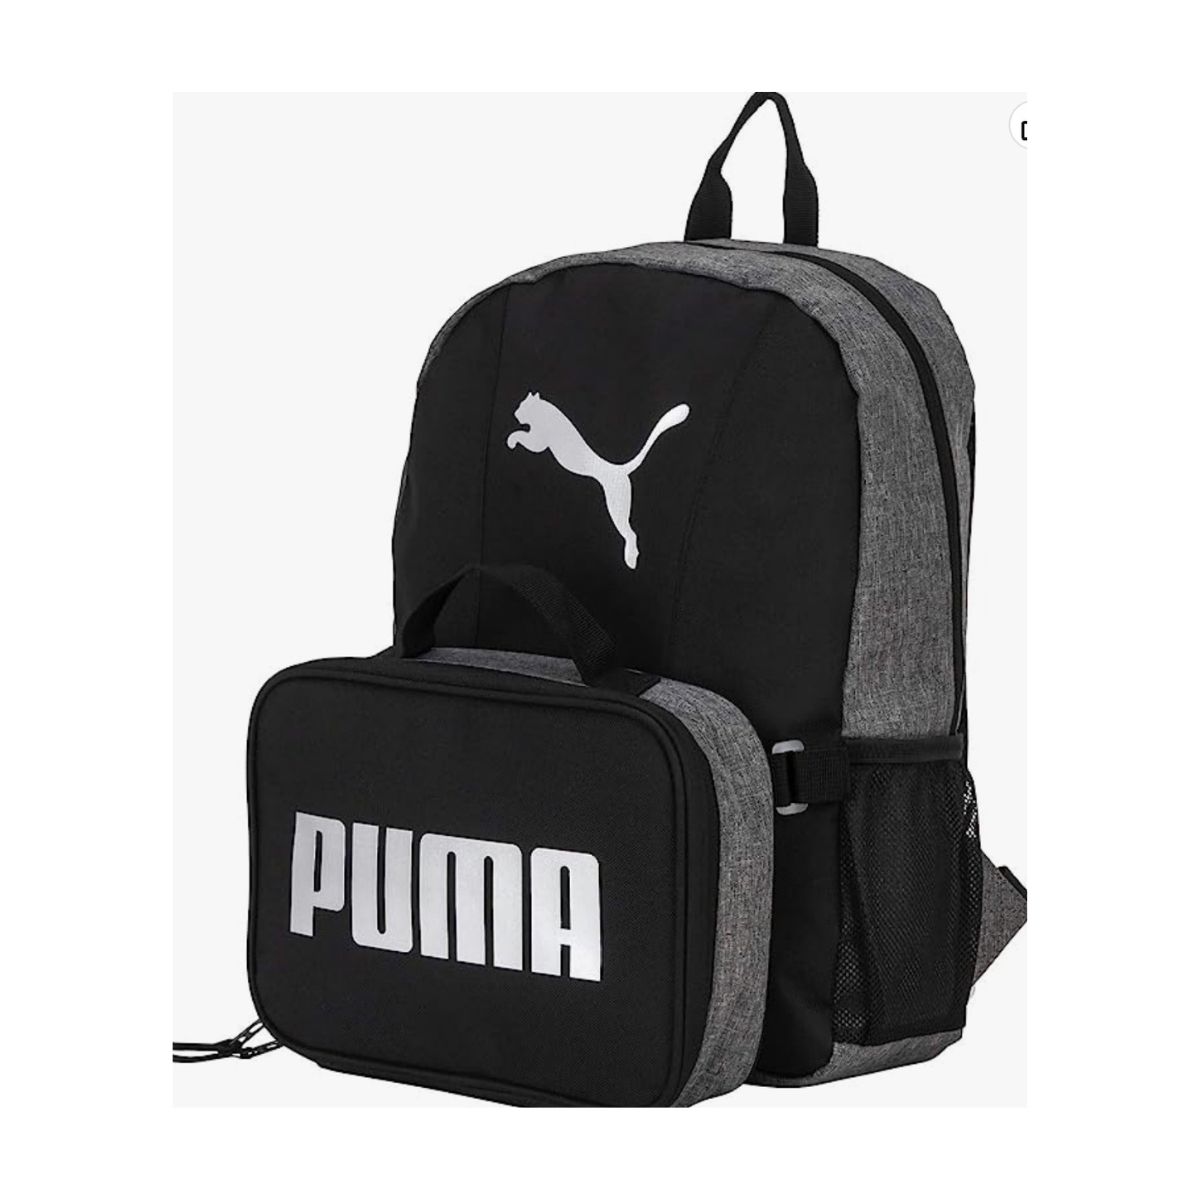 Black Puma kids backpack with detachable Puma black lunch box.